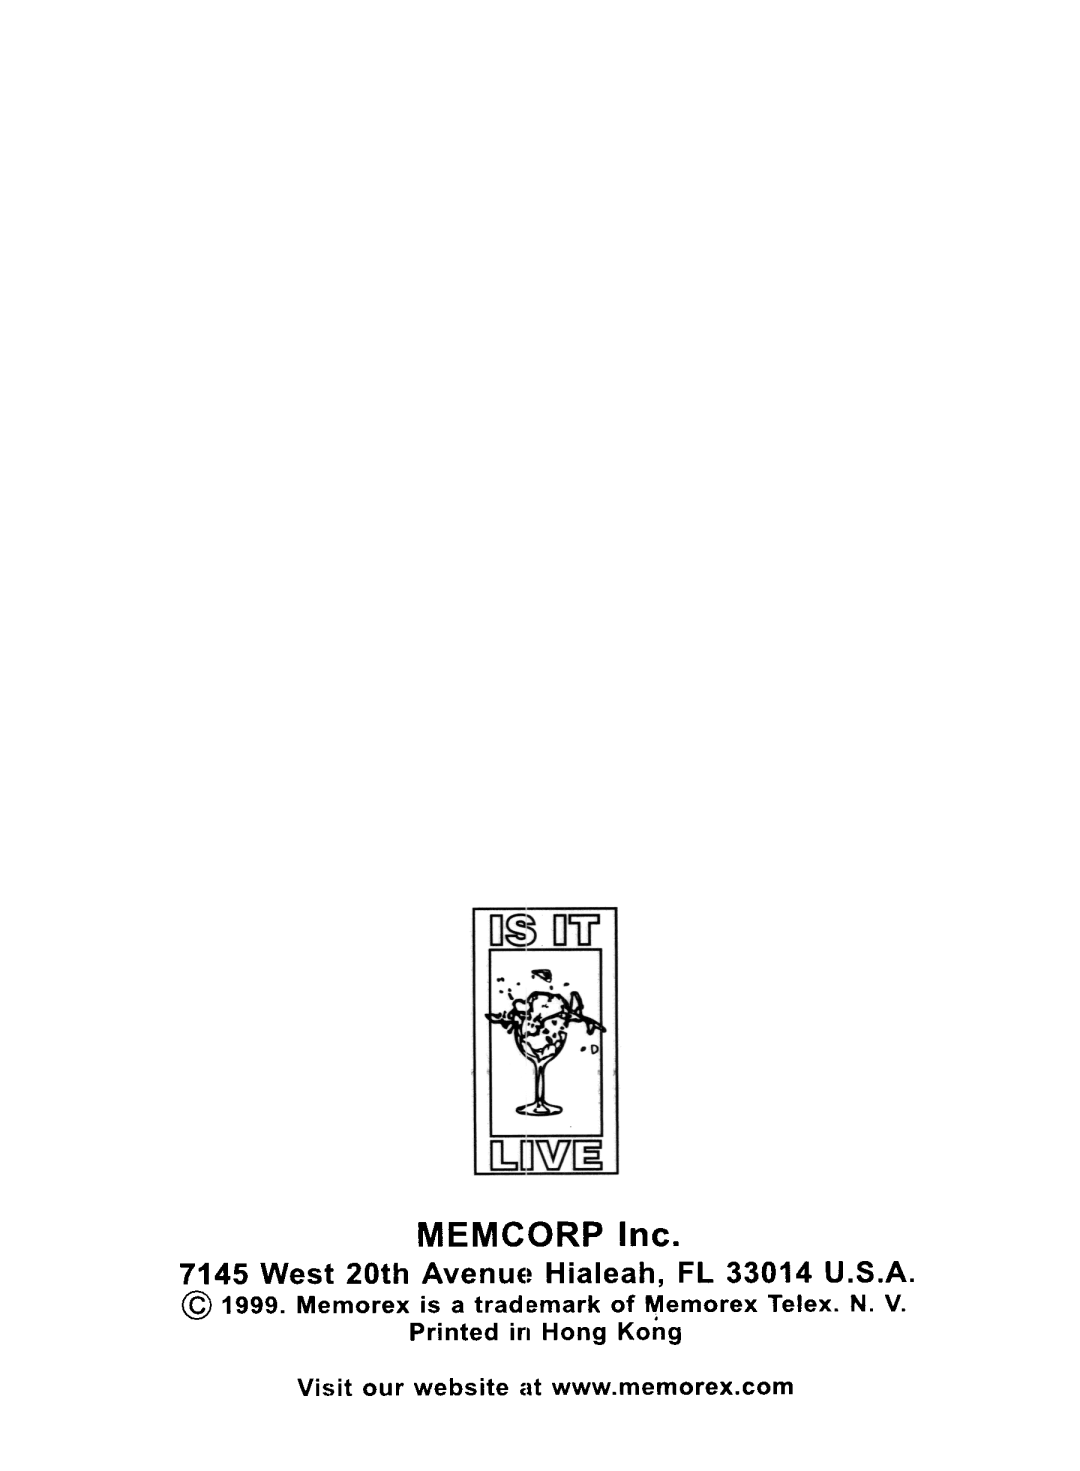 Memorex MKS 3001 manual West 20th AVenUE! Hialeah, FL 33014 U.S.A, MEMCORP Inc 